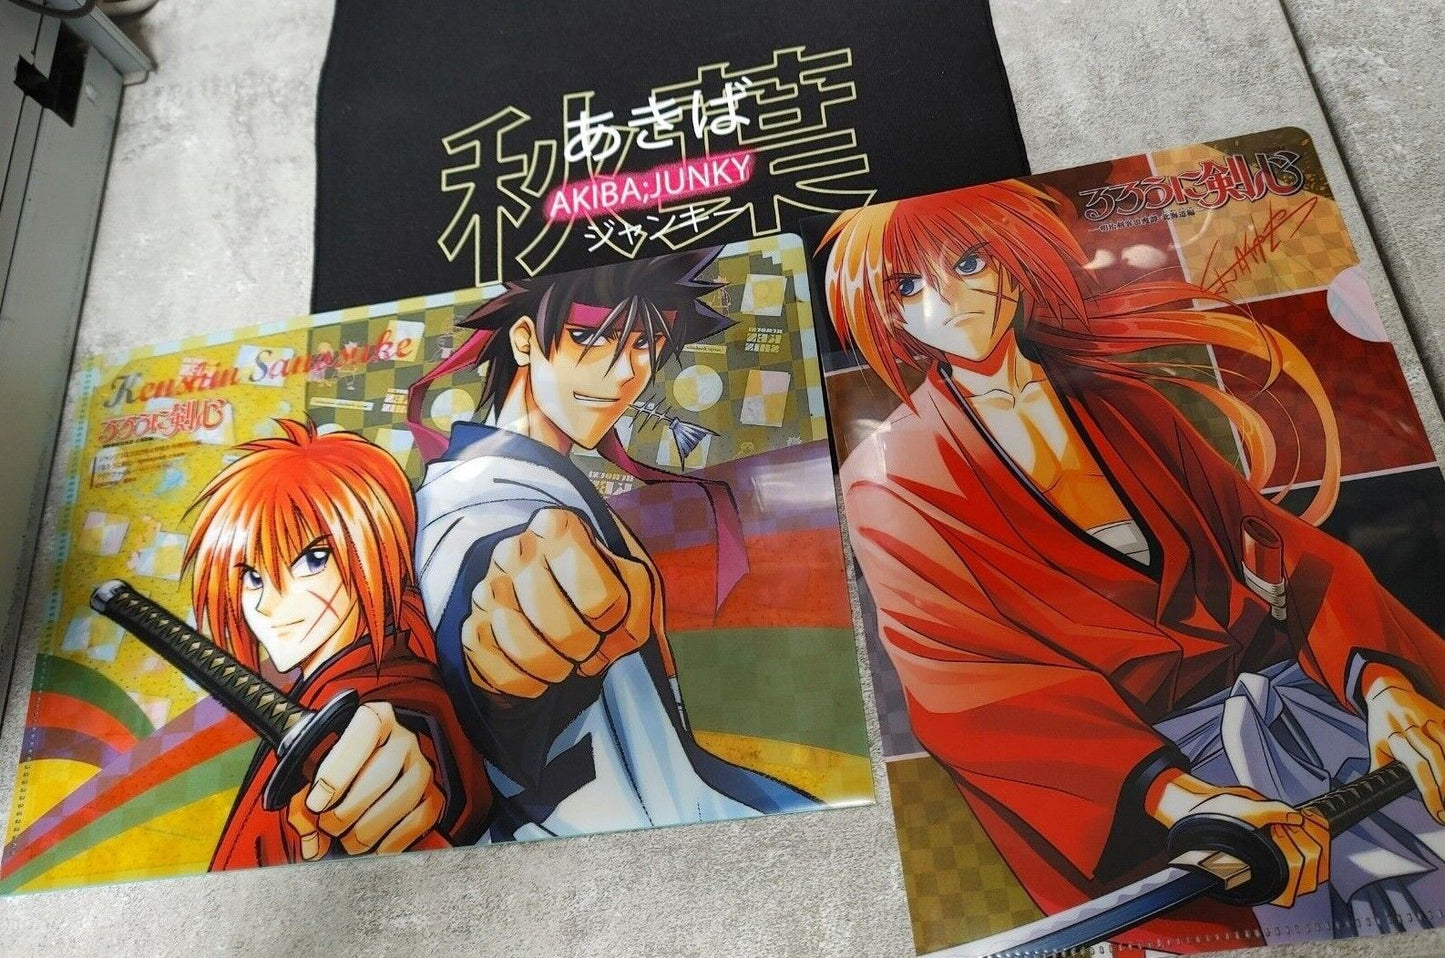 Anime Rurouni Kenshin Manga File Folder Lot Japan Jump Comics Limited Goods JP